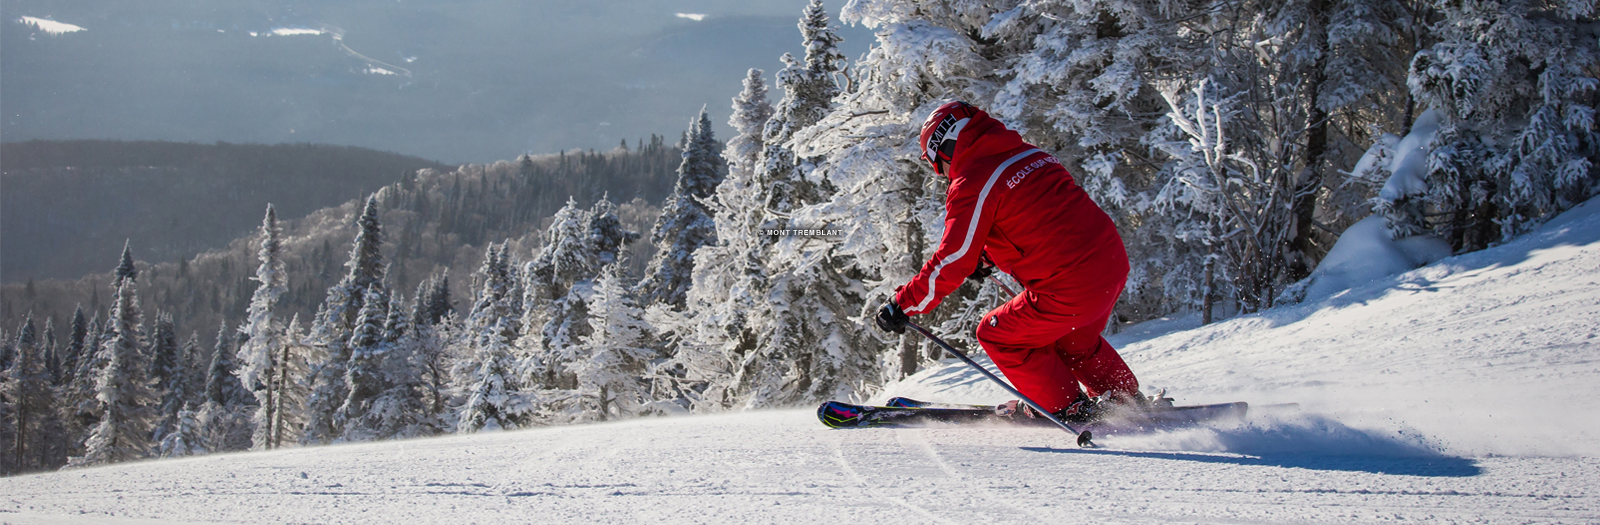 mont tremblant beginner skiing